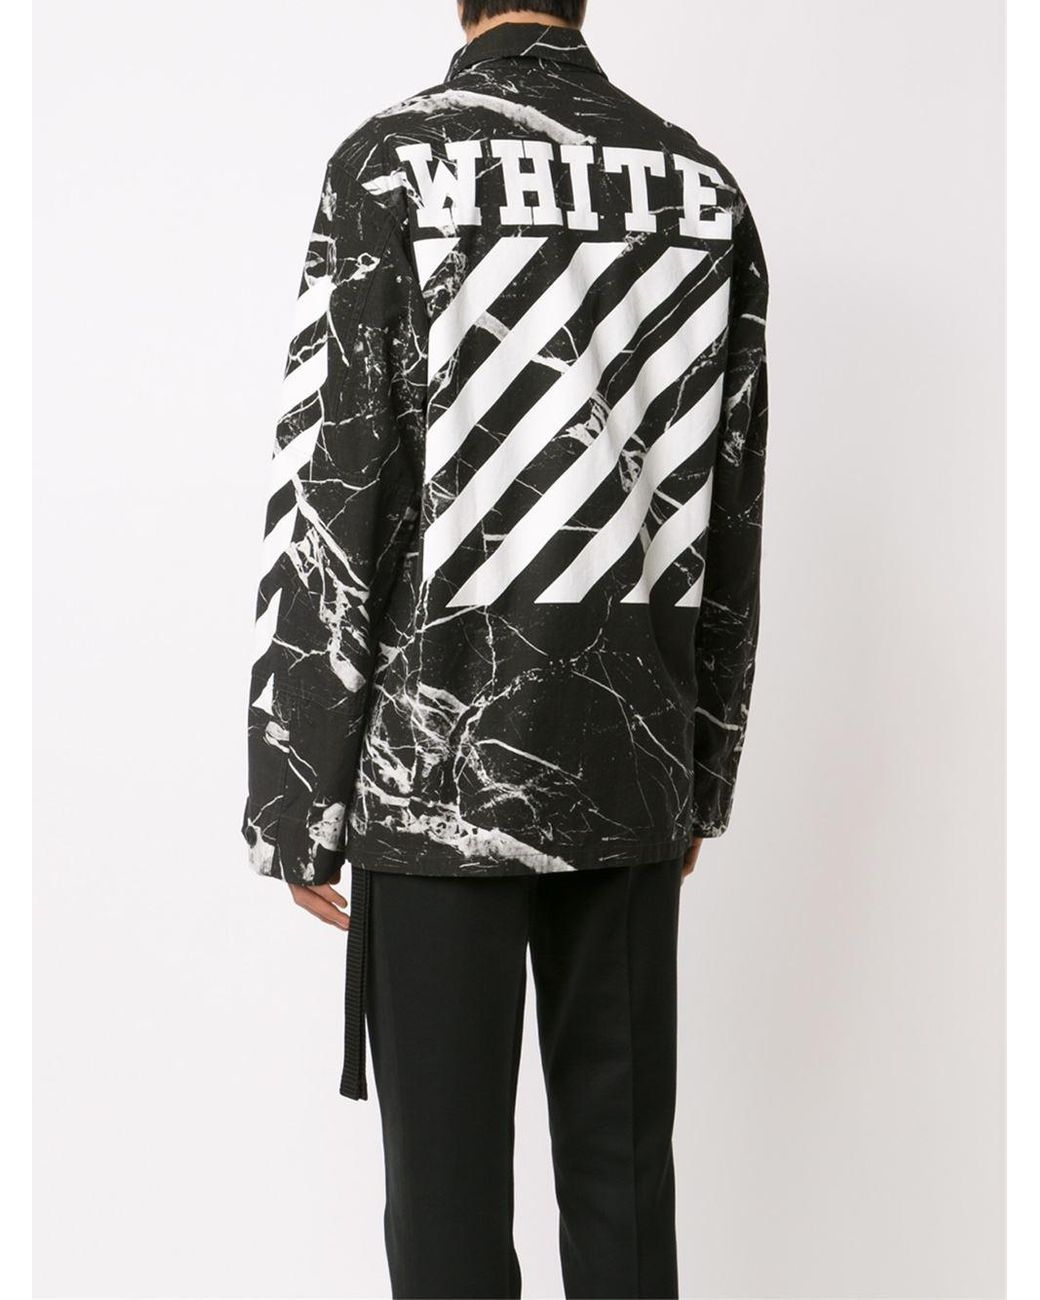 Off-White c/o Virgil Abloh Marble Print Jacket in Black for Men | Lyst